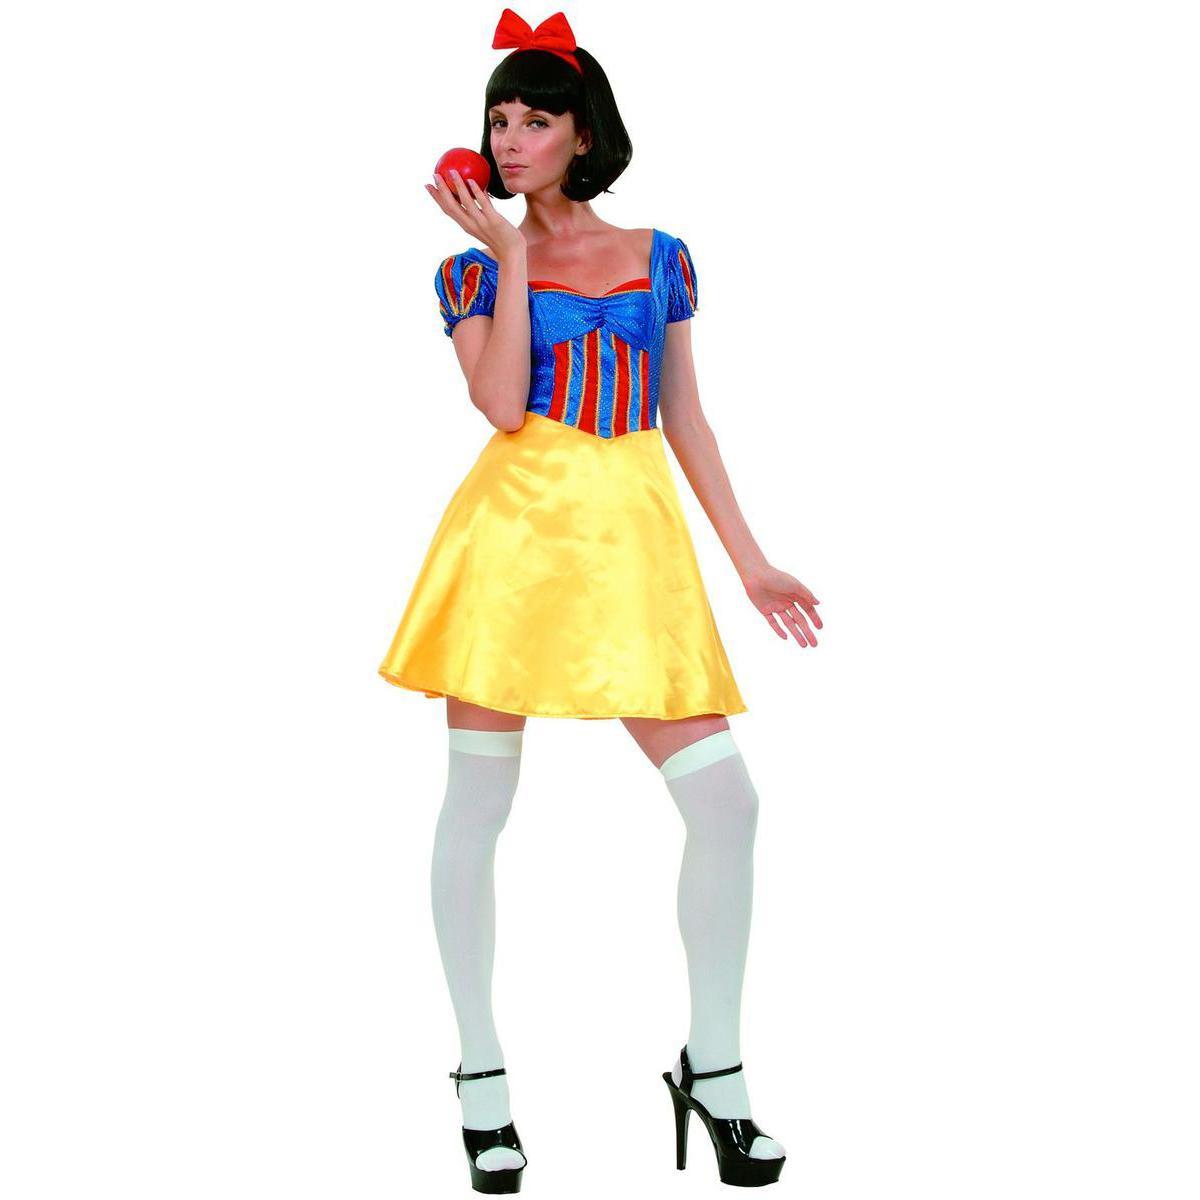 Costume adulte princesse sexy en polyester - S/M -Multicolore